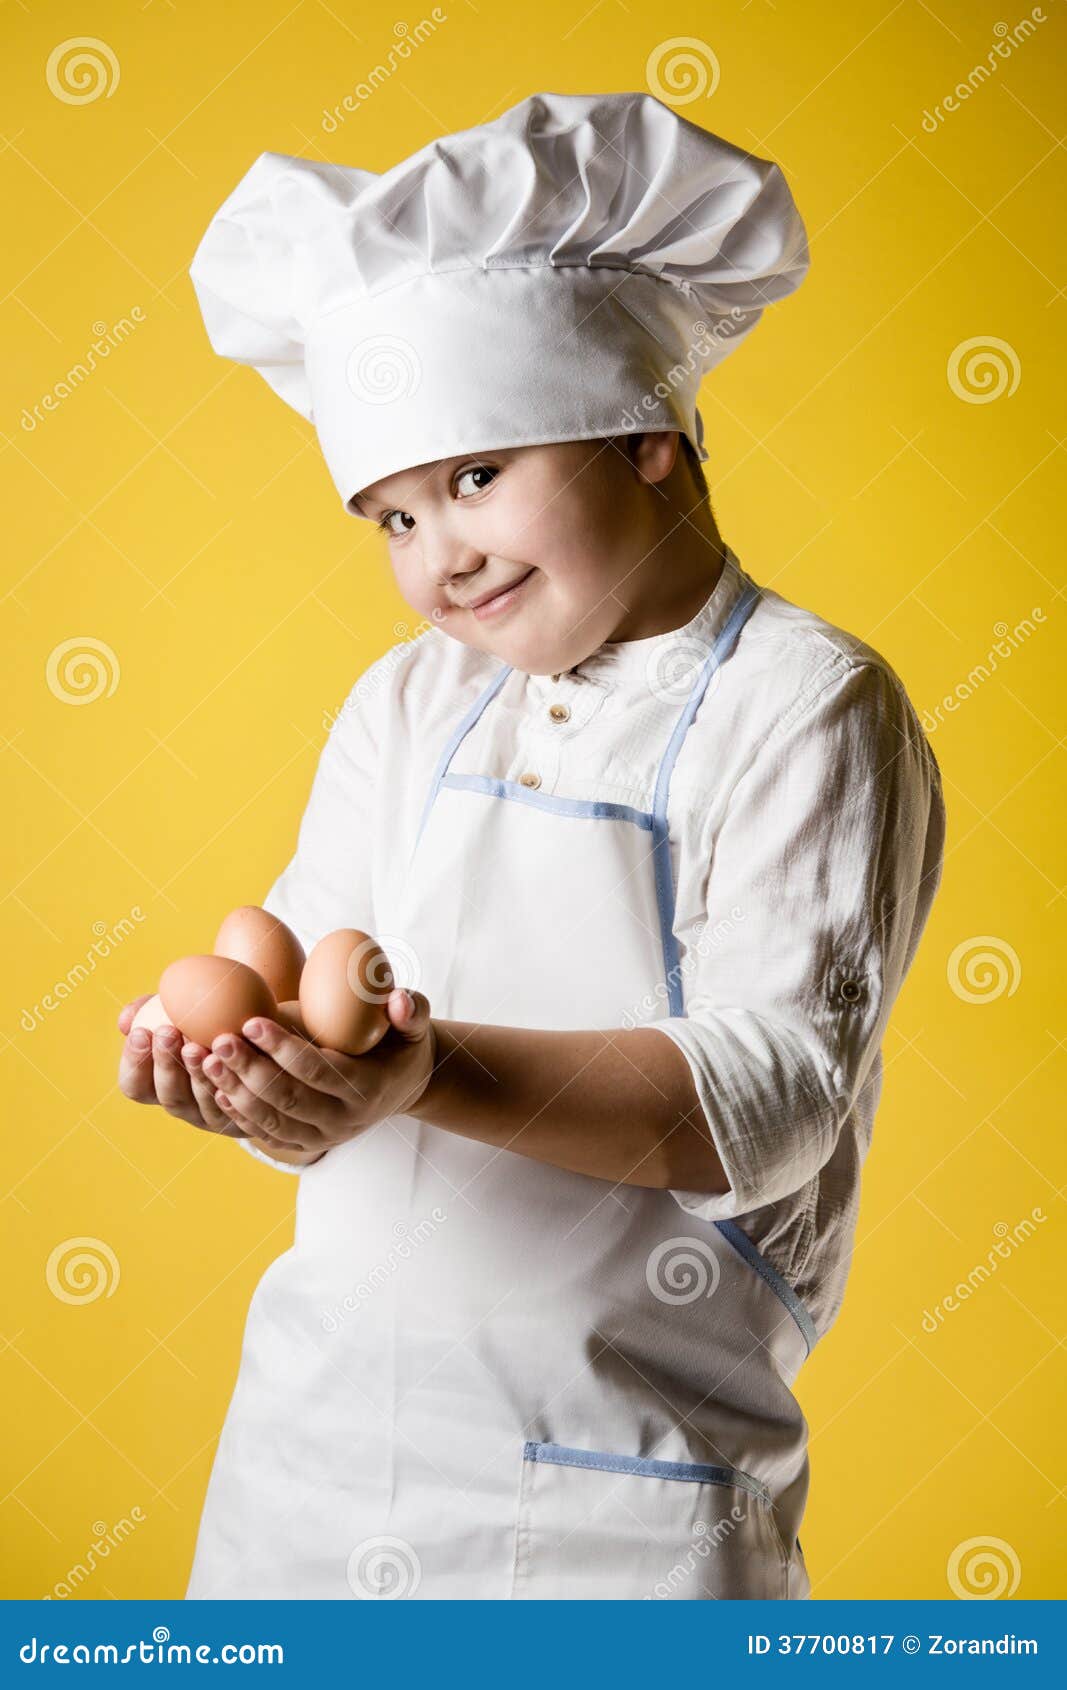 https://thumbs.dreamstime.com/z/little-boy-chef-uniform-37700817.jpg